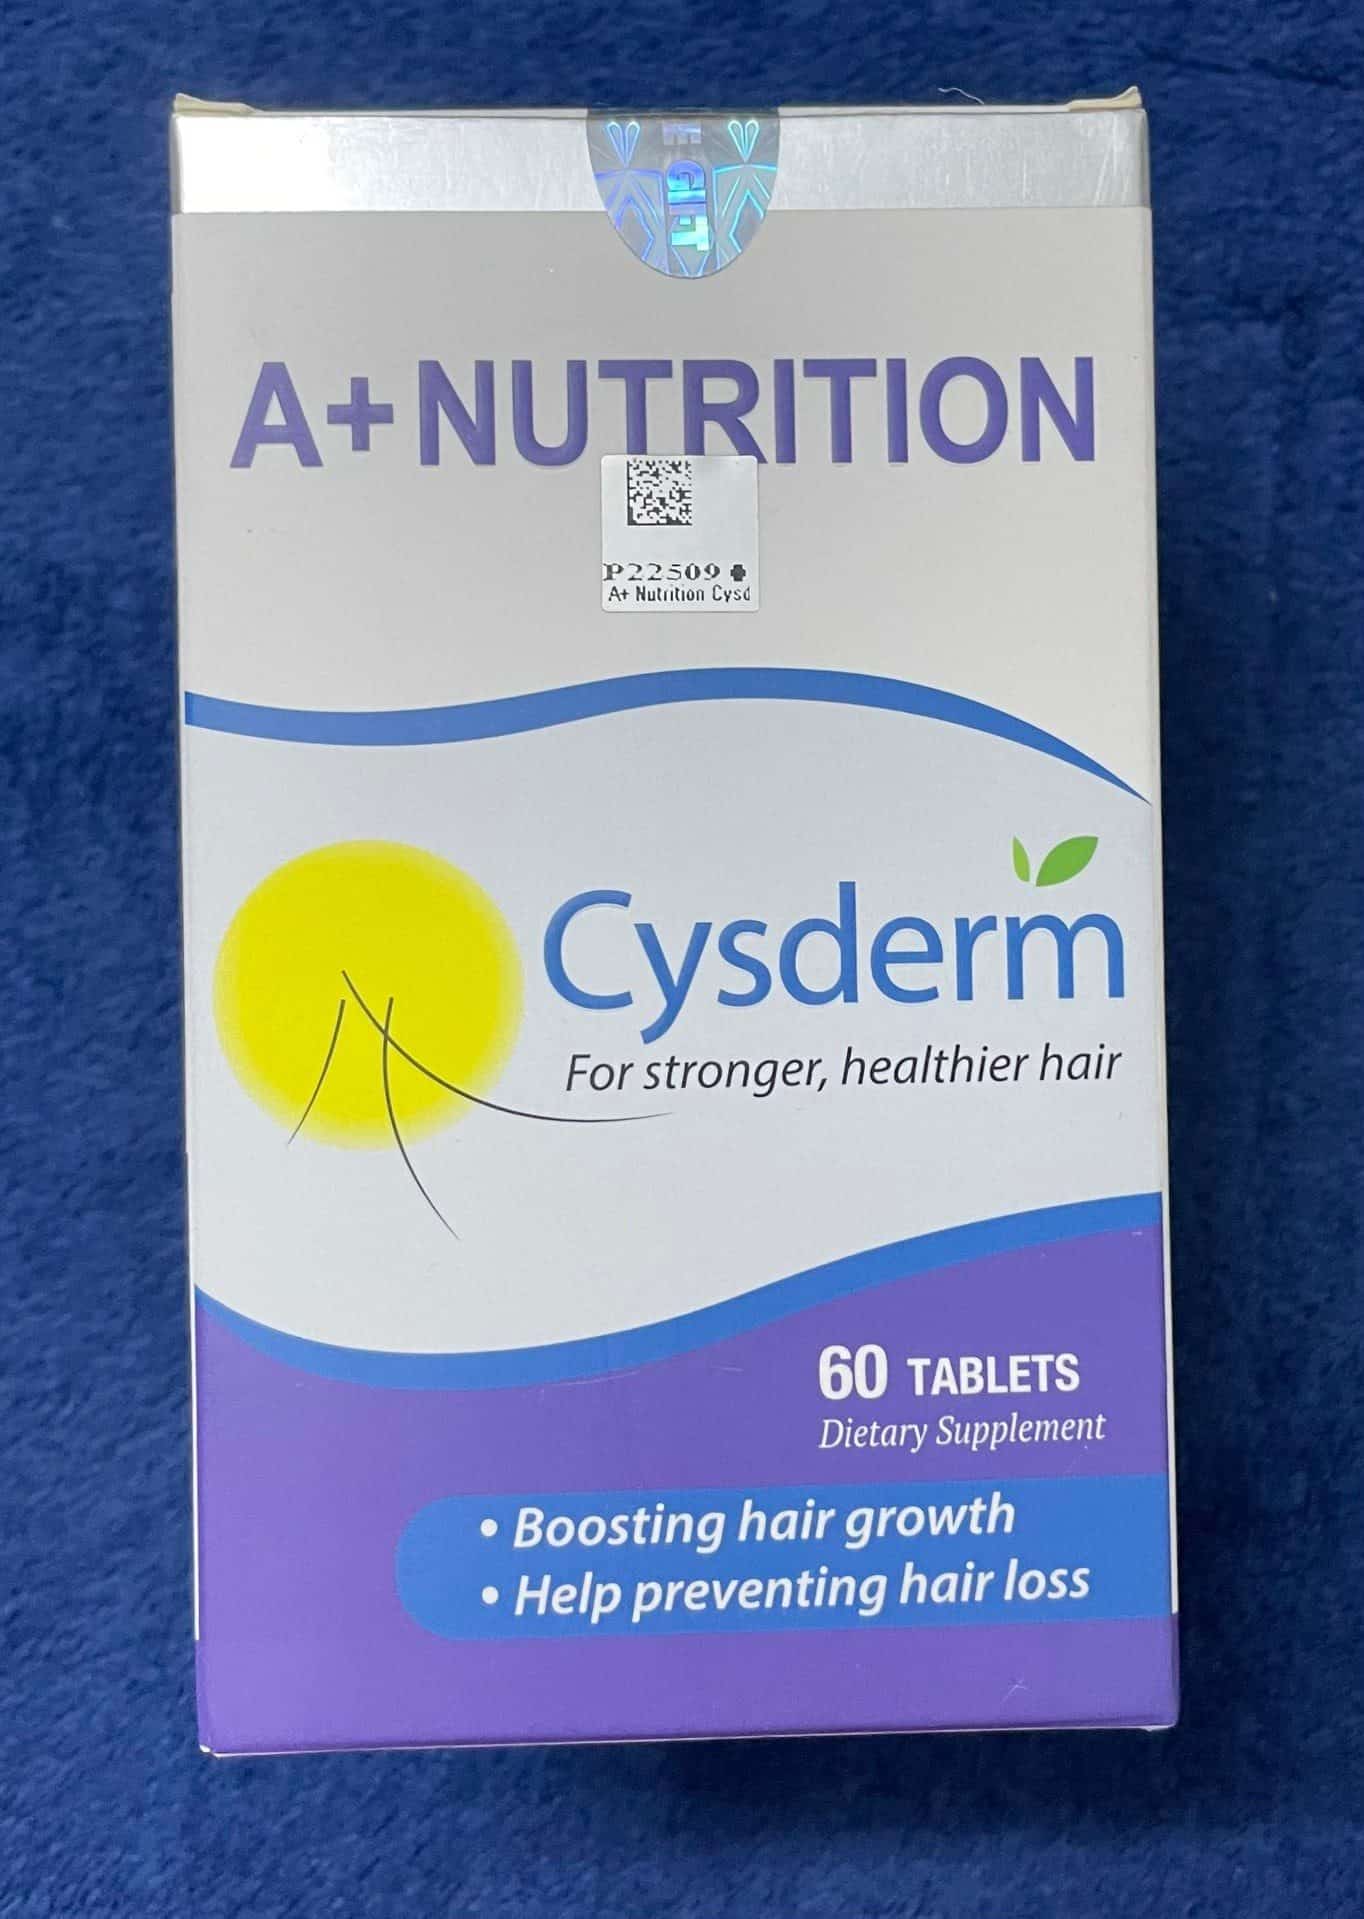 A+ Nutrition Cysderm 2